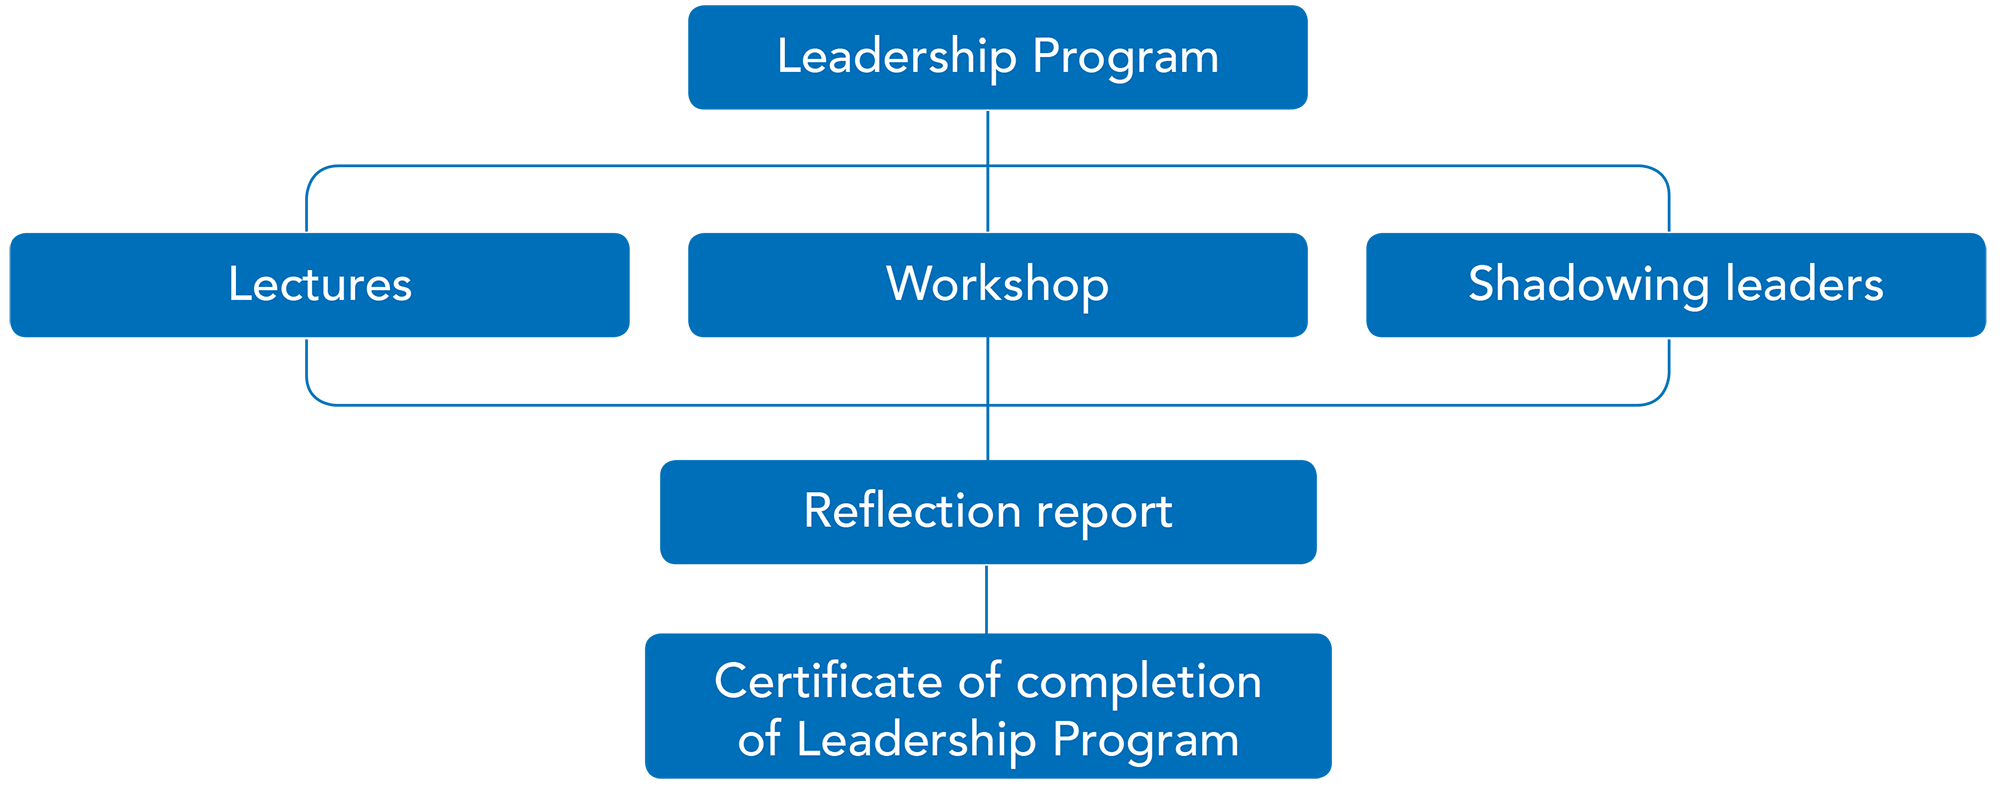 SSMC Education Leadership Program Features 